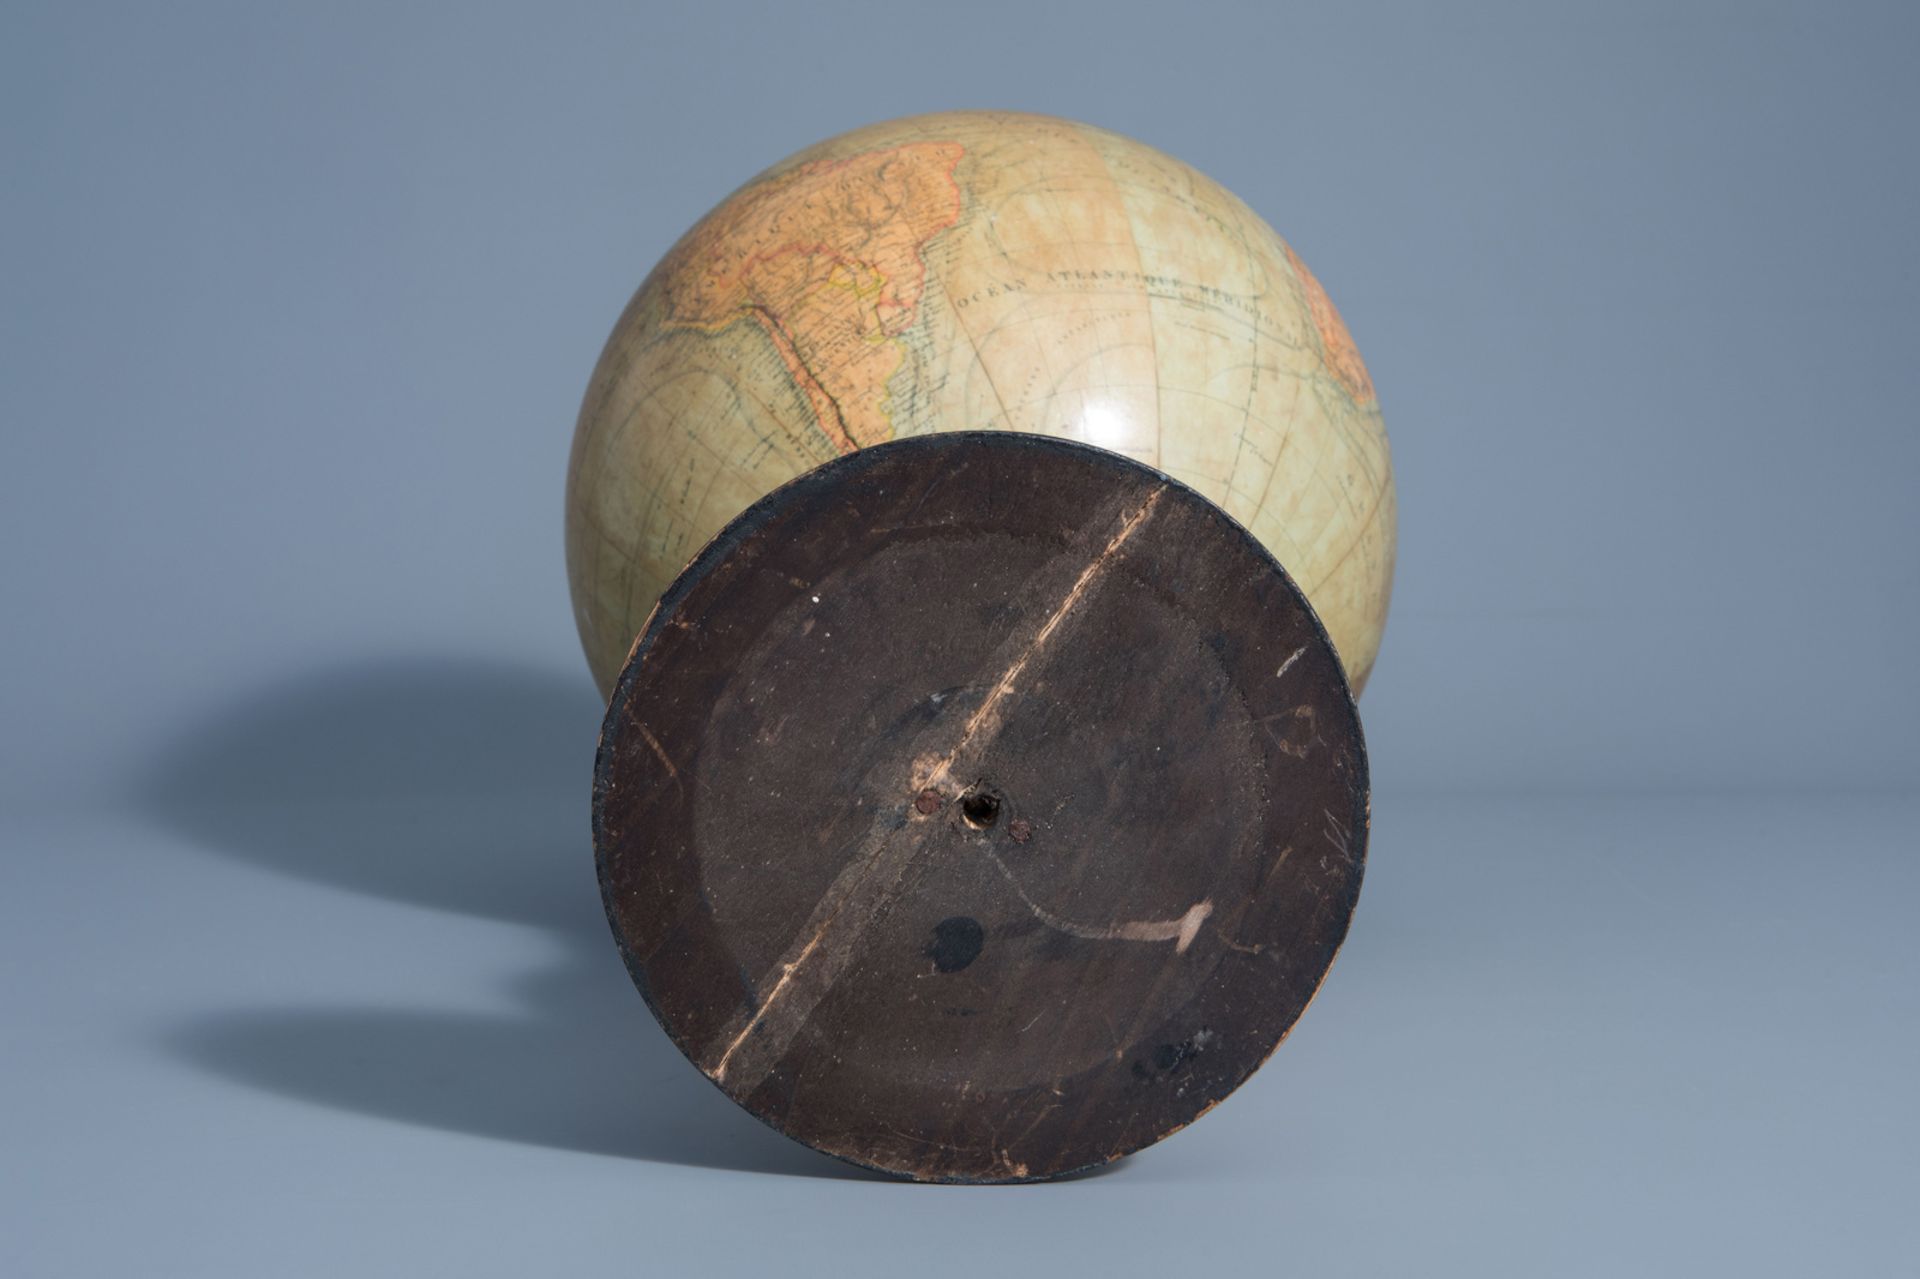 A Maison Delamarche globe on an ebonized wooden base, France, about 1900 - Image 8 of 20